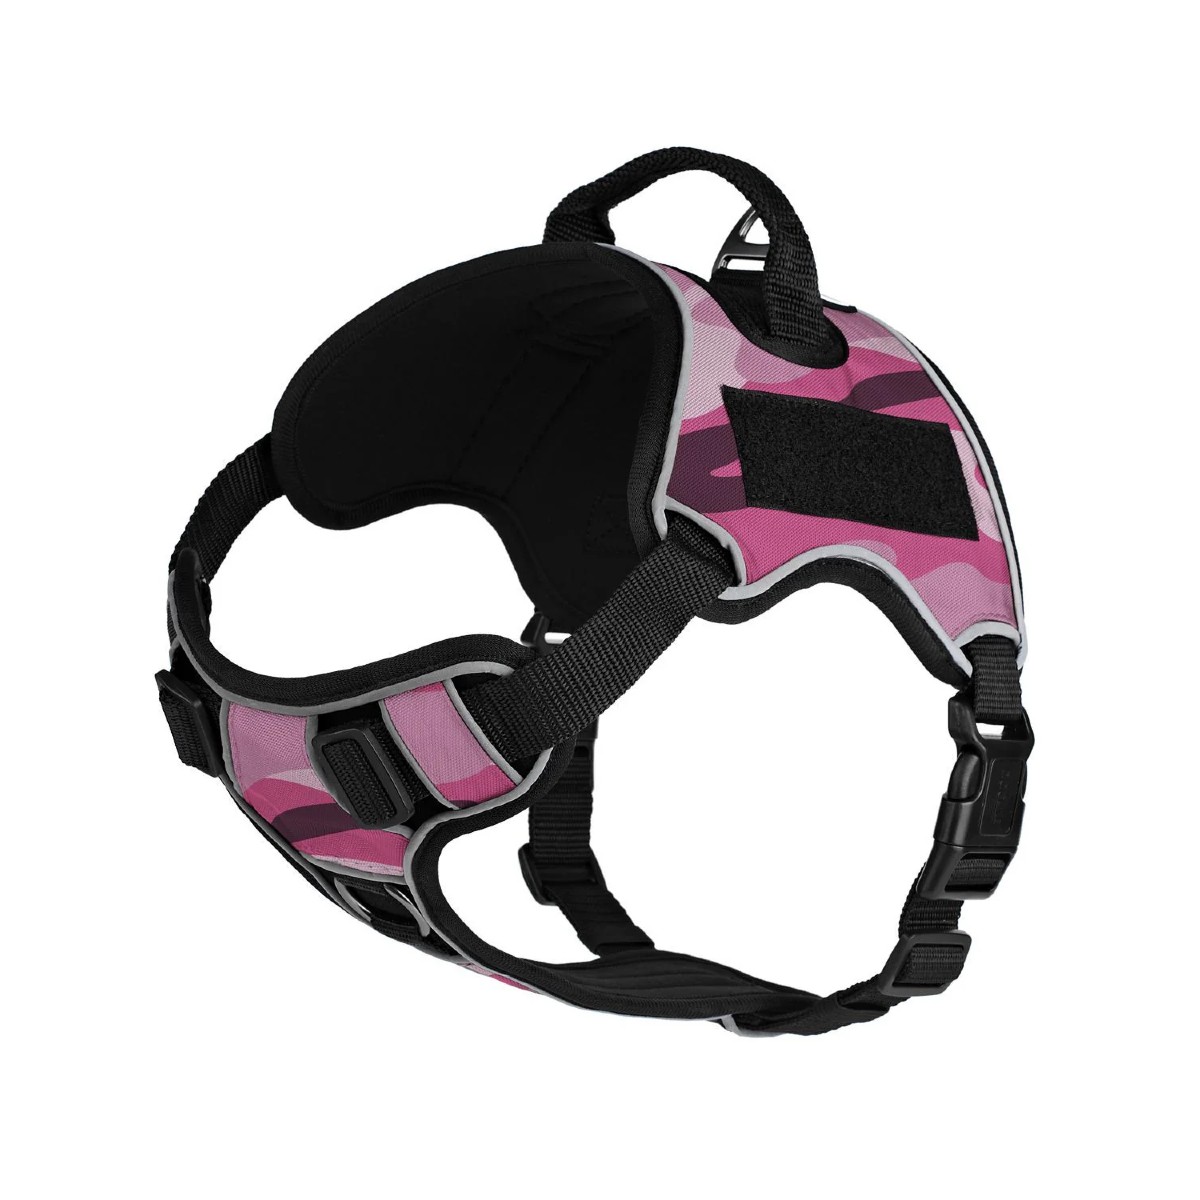 Dogline Quest Multipurpose No Pull Dog Harness - Pink Camo